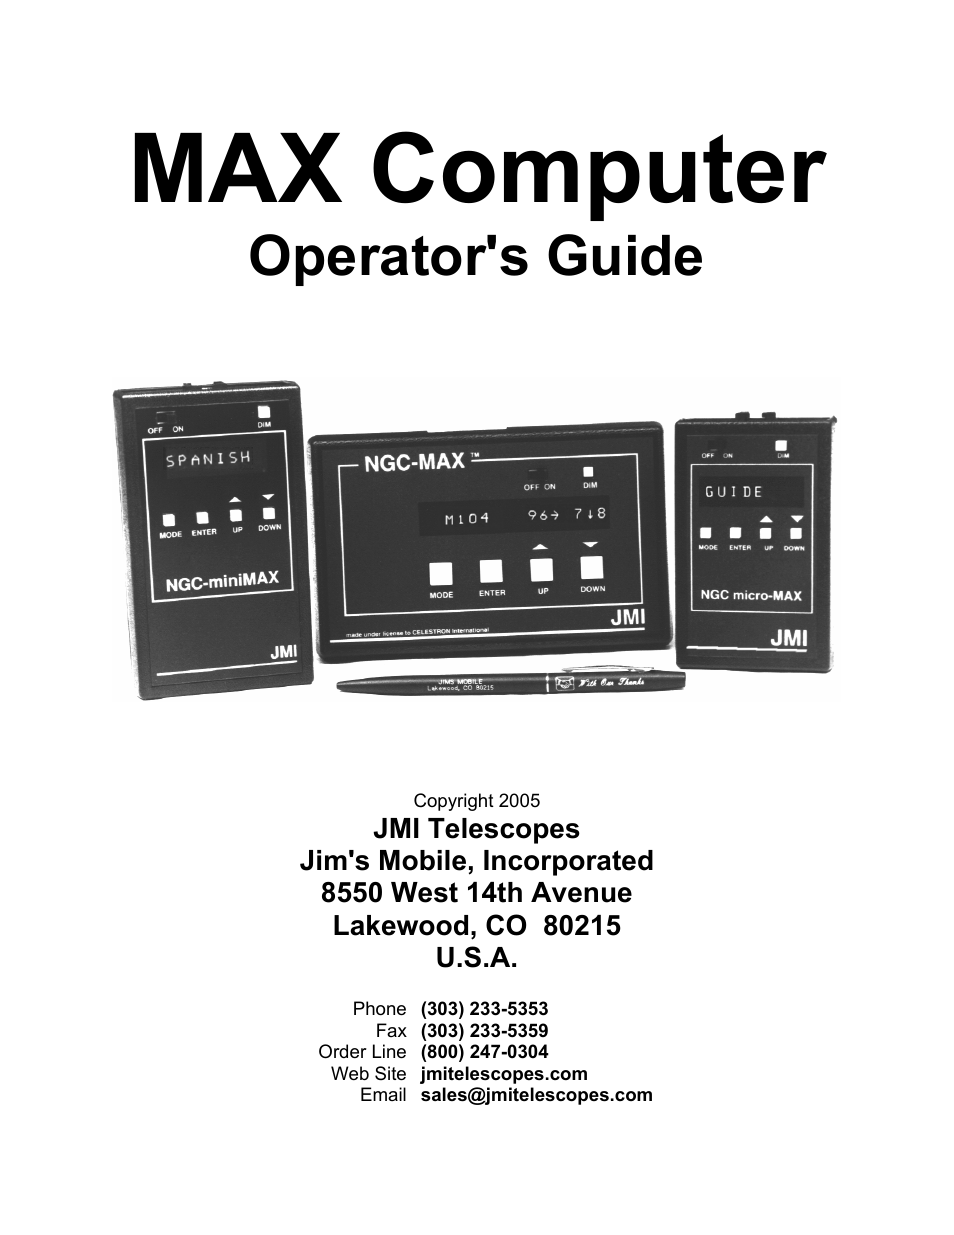 JMI Telescopes MAX Computer User Manual | 16 pages